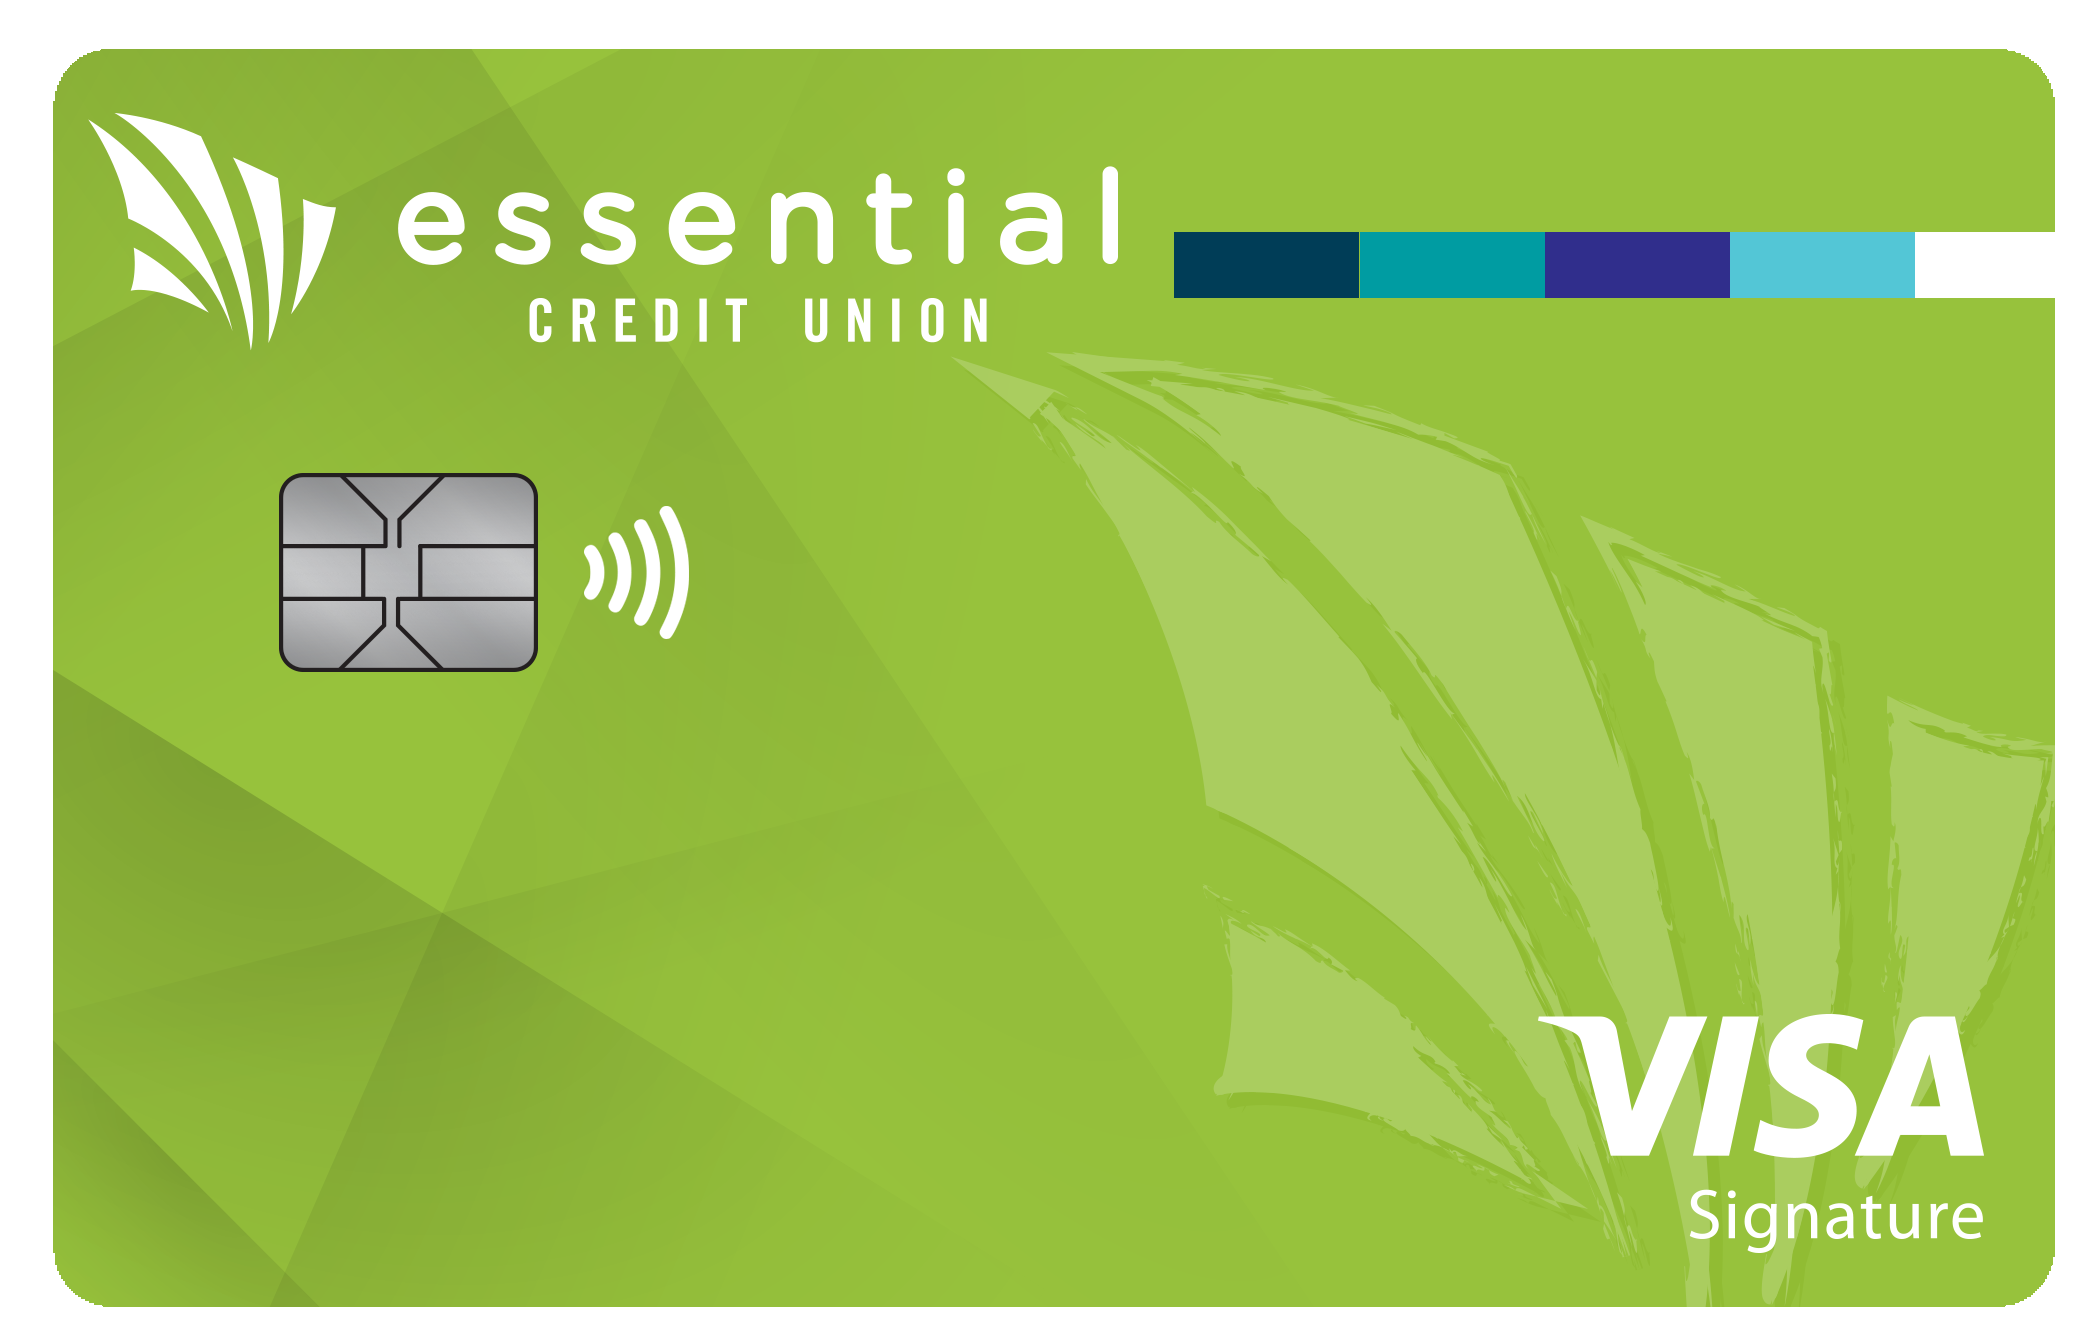 Essential Credit Union Travel Rewards+ Card